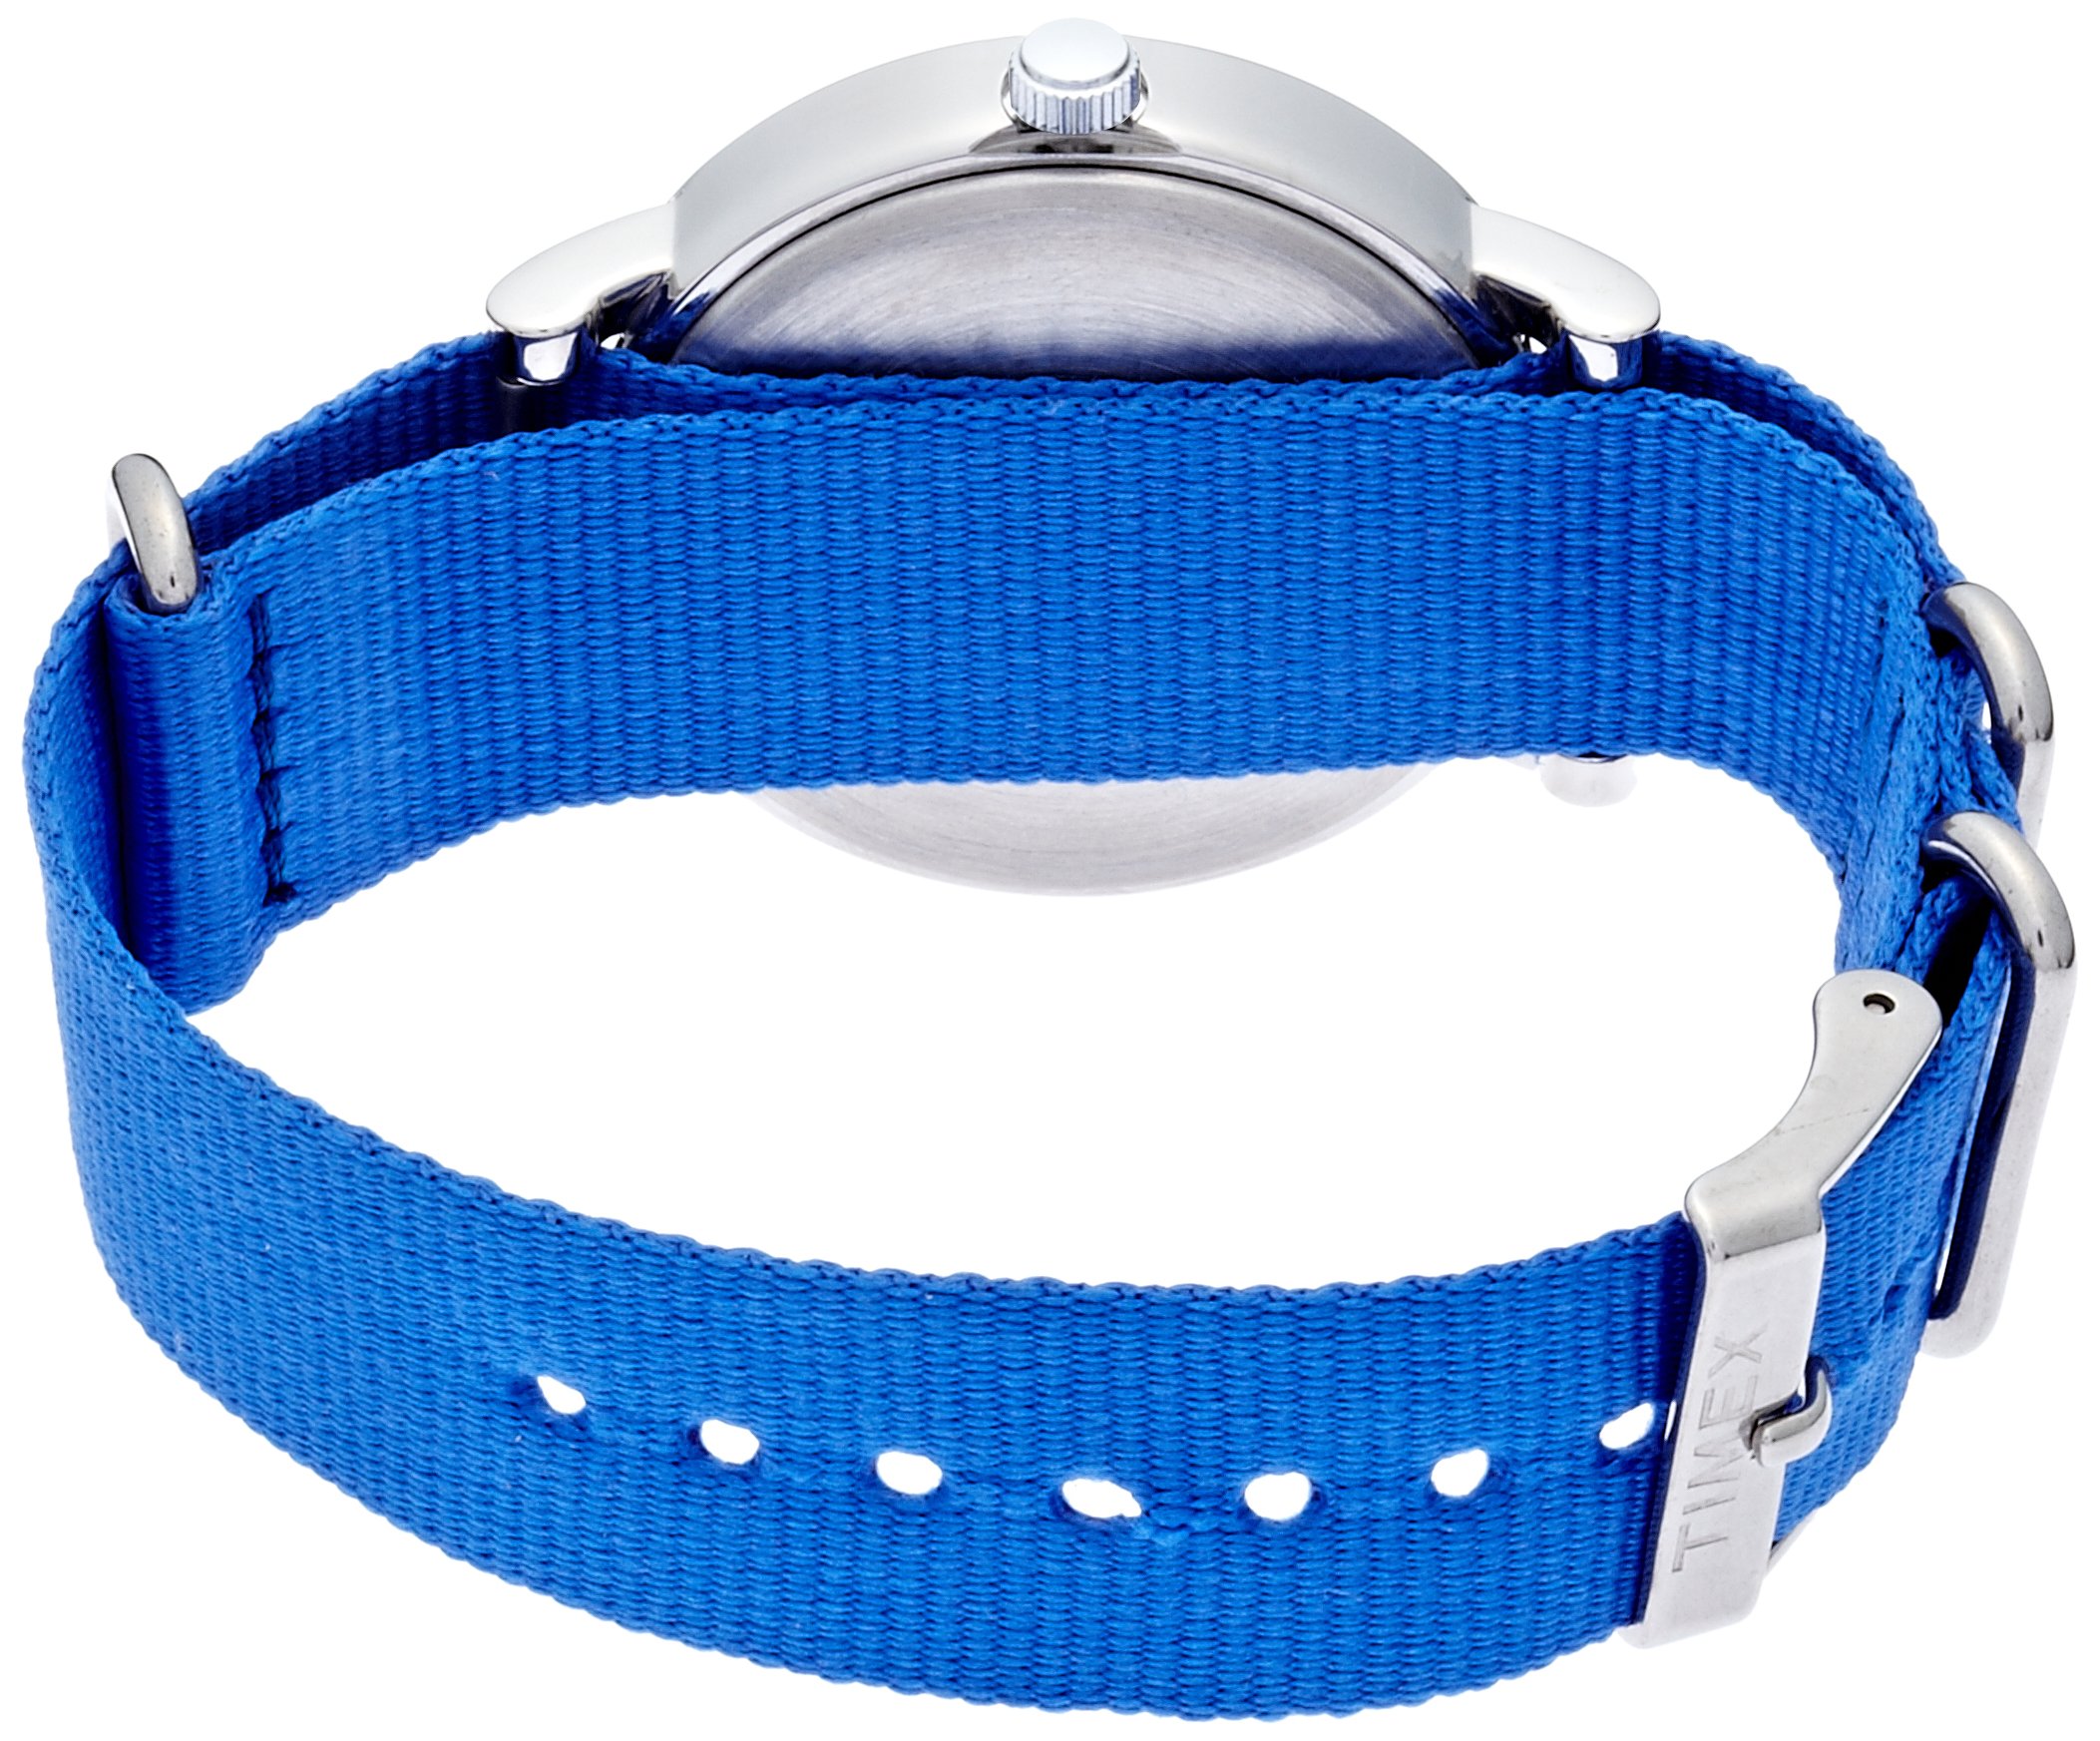 Timex Quartz Brass and Nylon Watch, Color:Blue (Model: T2P362)